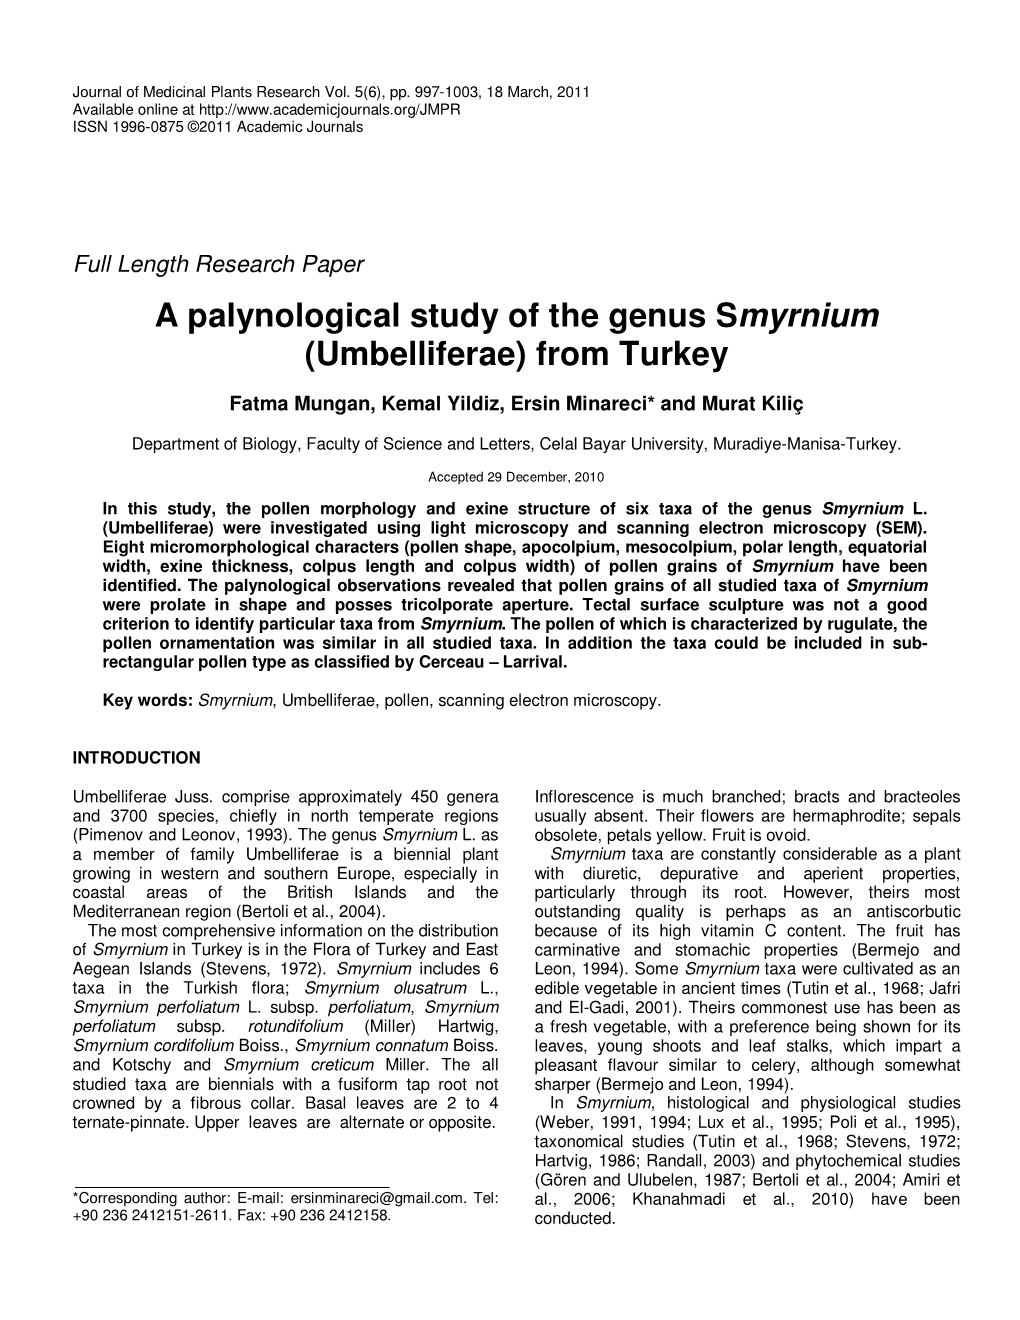 A Palynological Study of the Genus Smyrnium (Umbelliferae) from Turkey